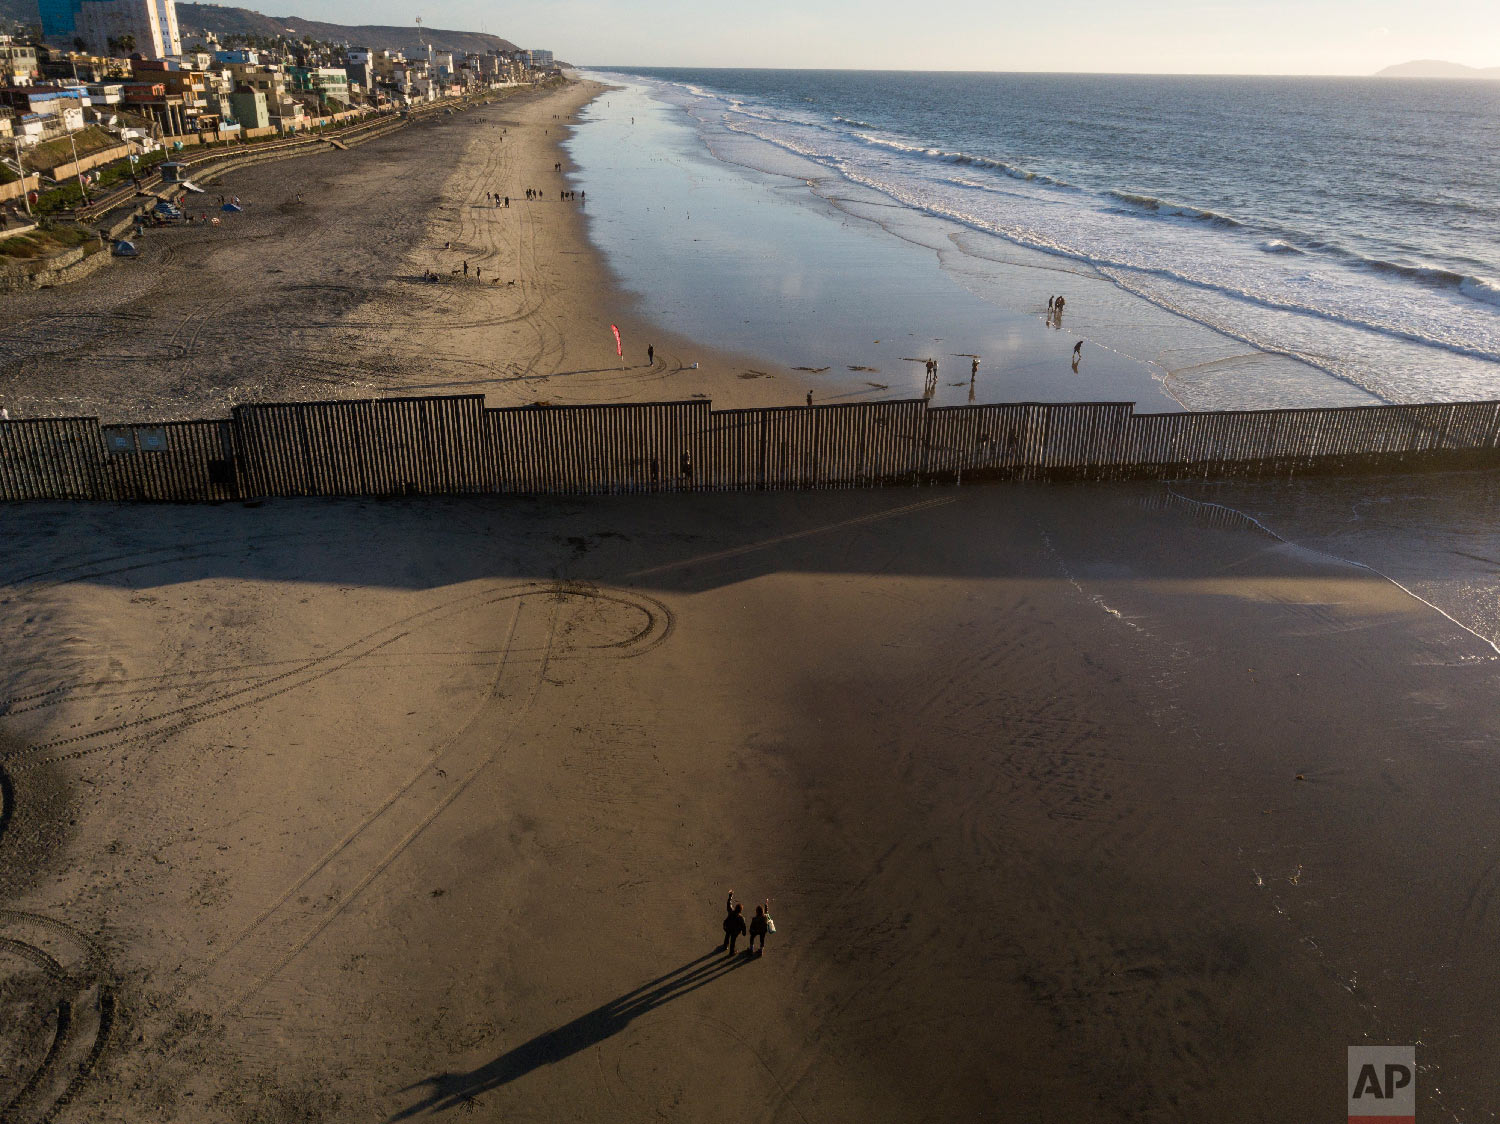  People on the U.S. side of the border wave at those on the Mexico side, at the border structure in San Diego on Nov. 23, 2018. (AP Photo/Rodrigo Abd) 